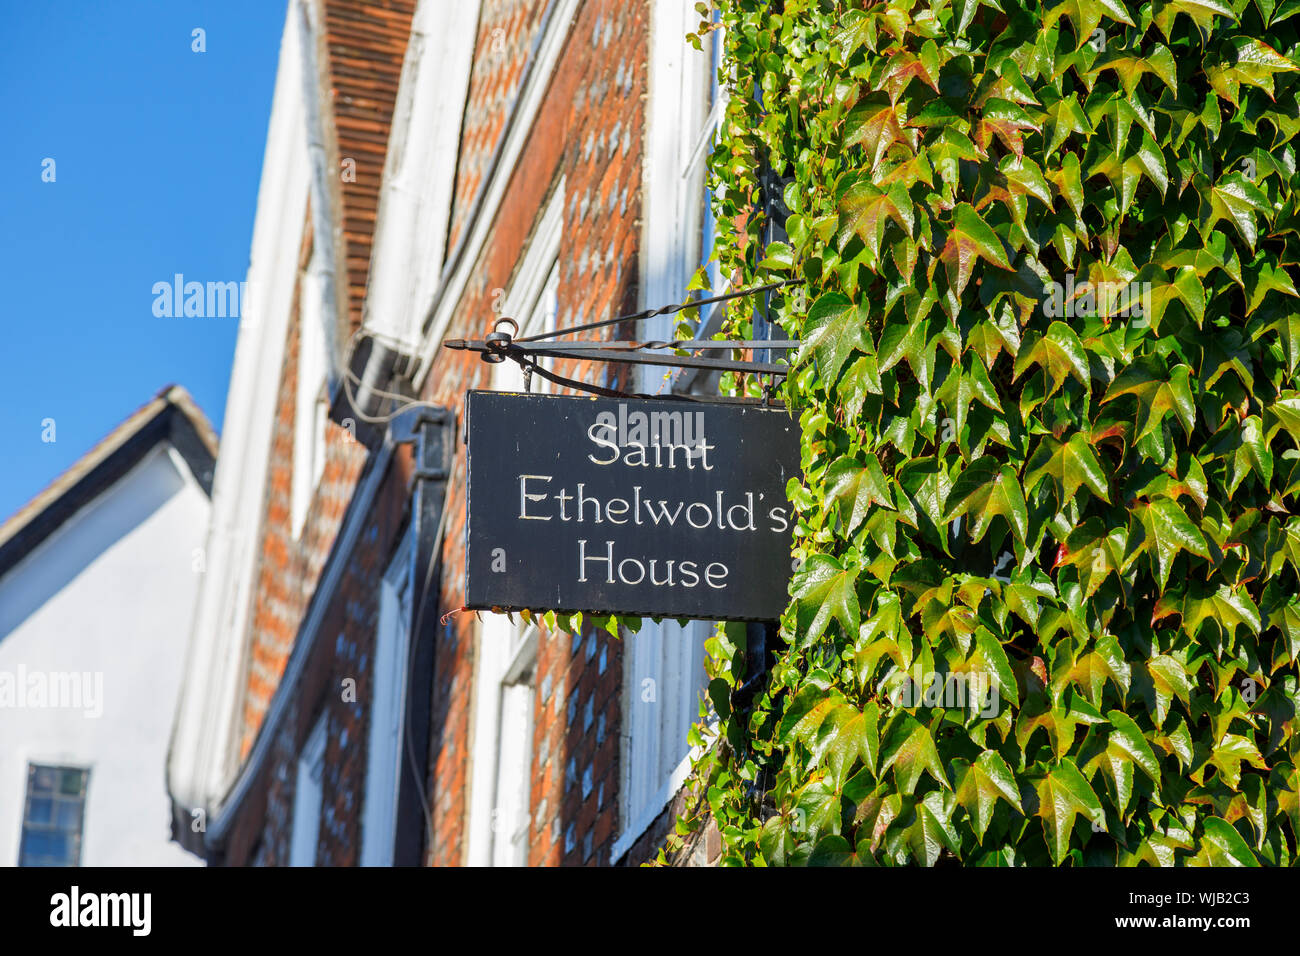 Segno a Saint Ethelwold's House, un centro spirituale e ritirarsi nella storica East St Helen Street, Abingdon-on-Thames, Oxfordshire, sud-est Inghilterra Foto Stock